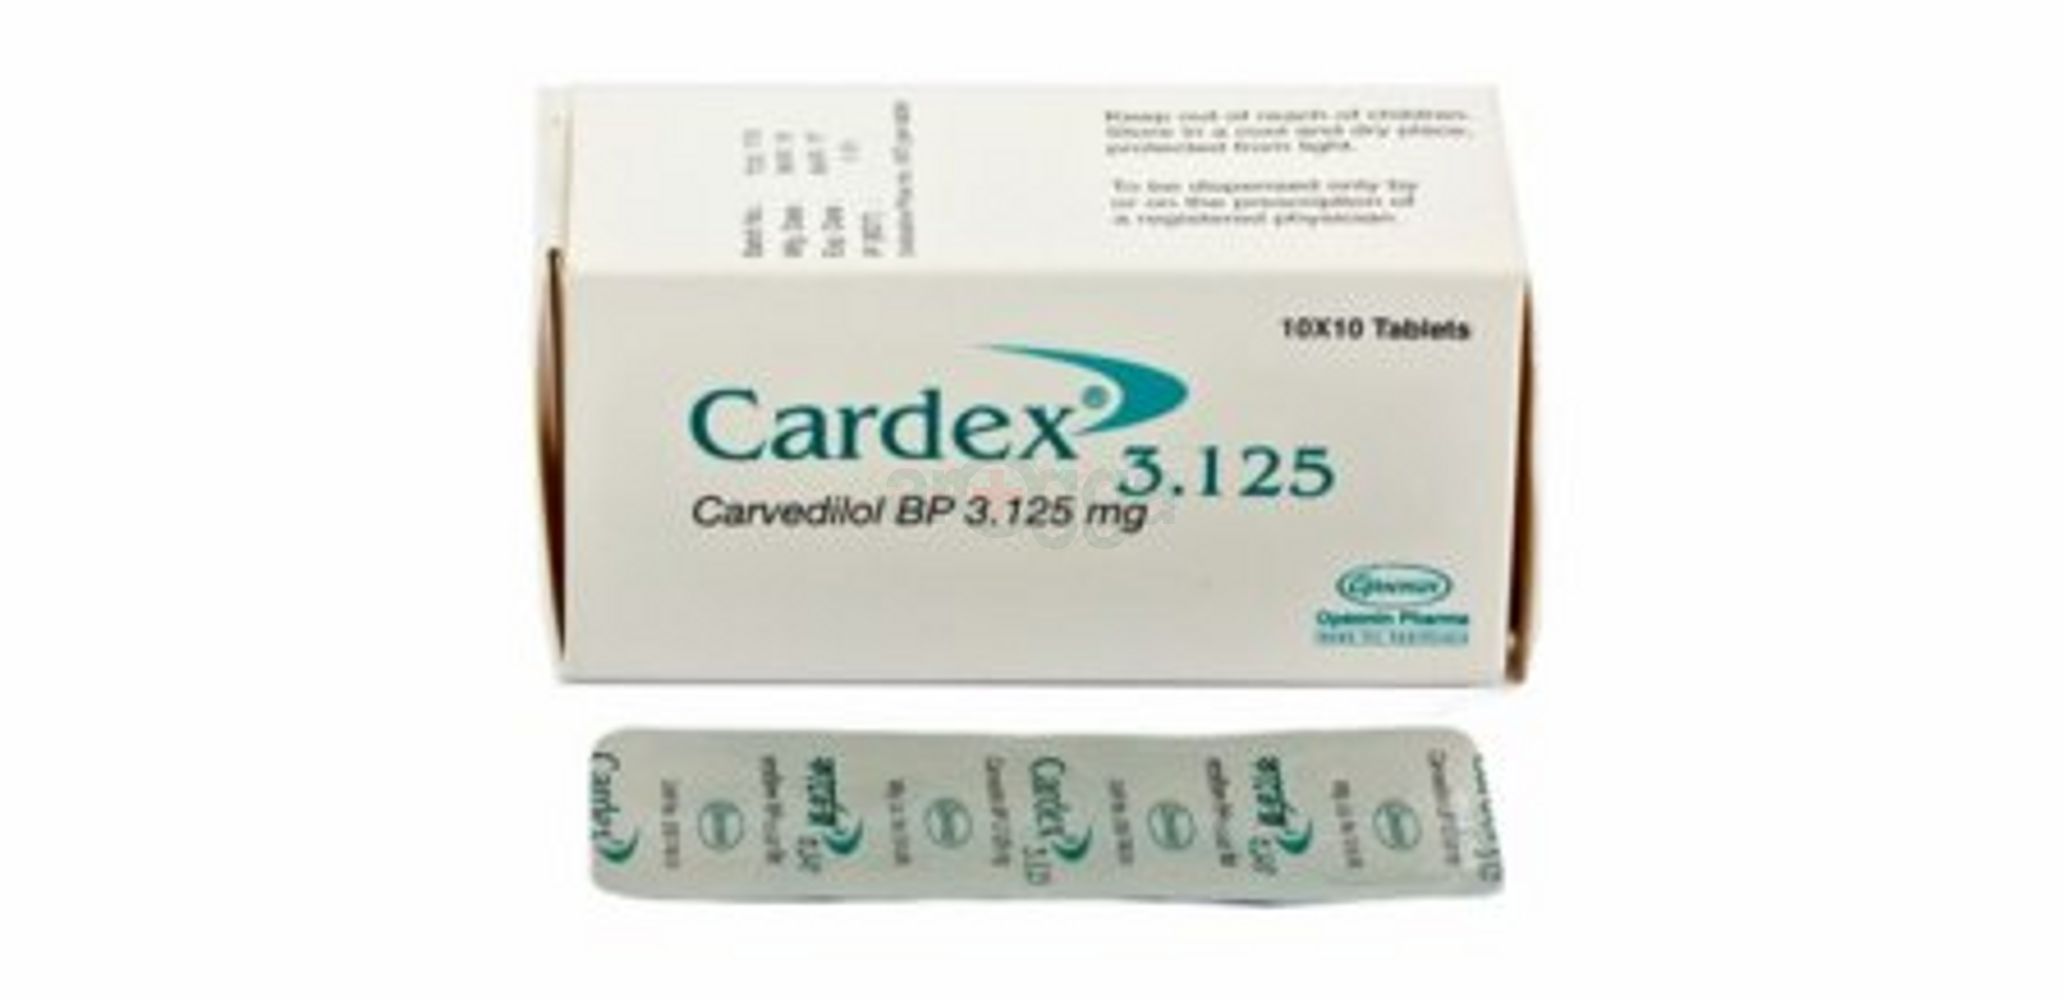 Cardex 3.125